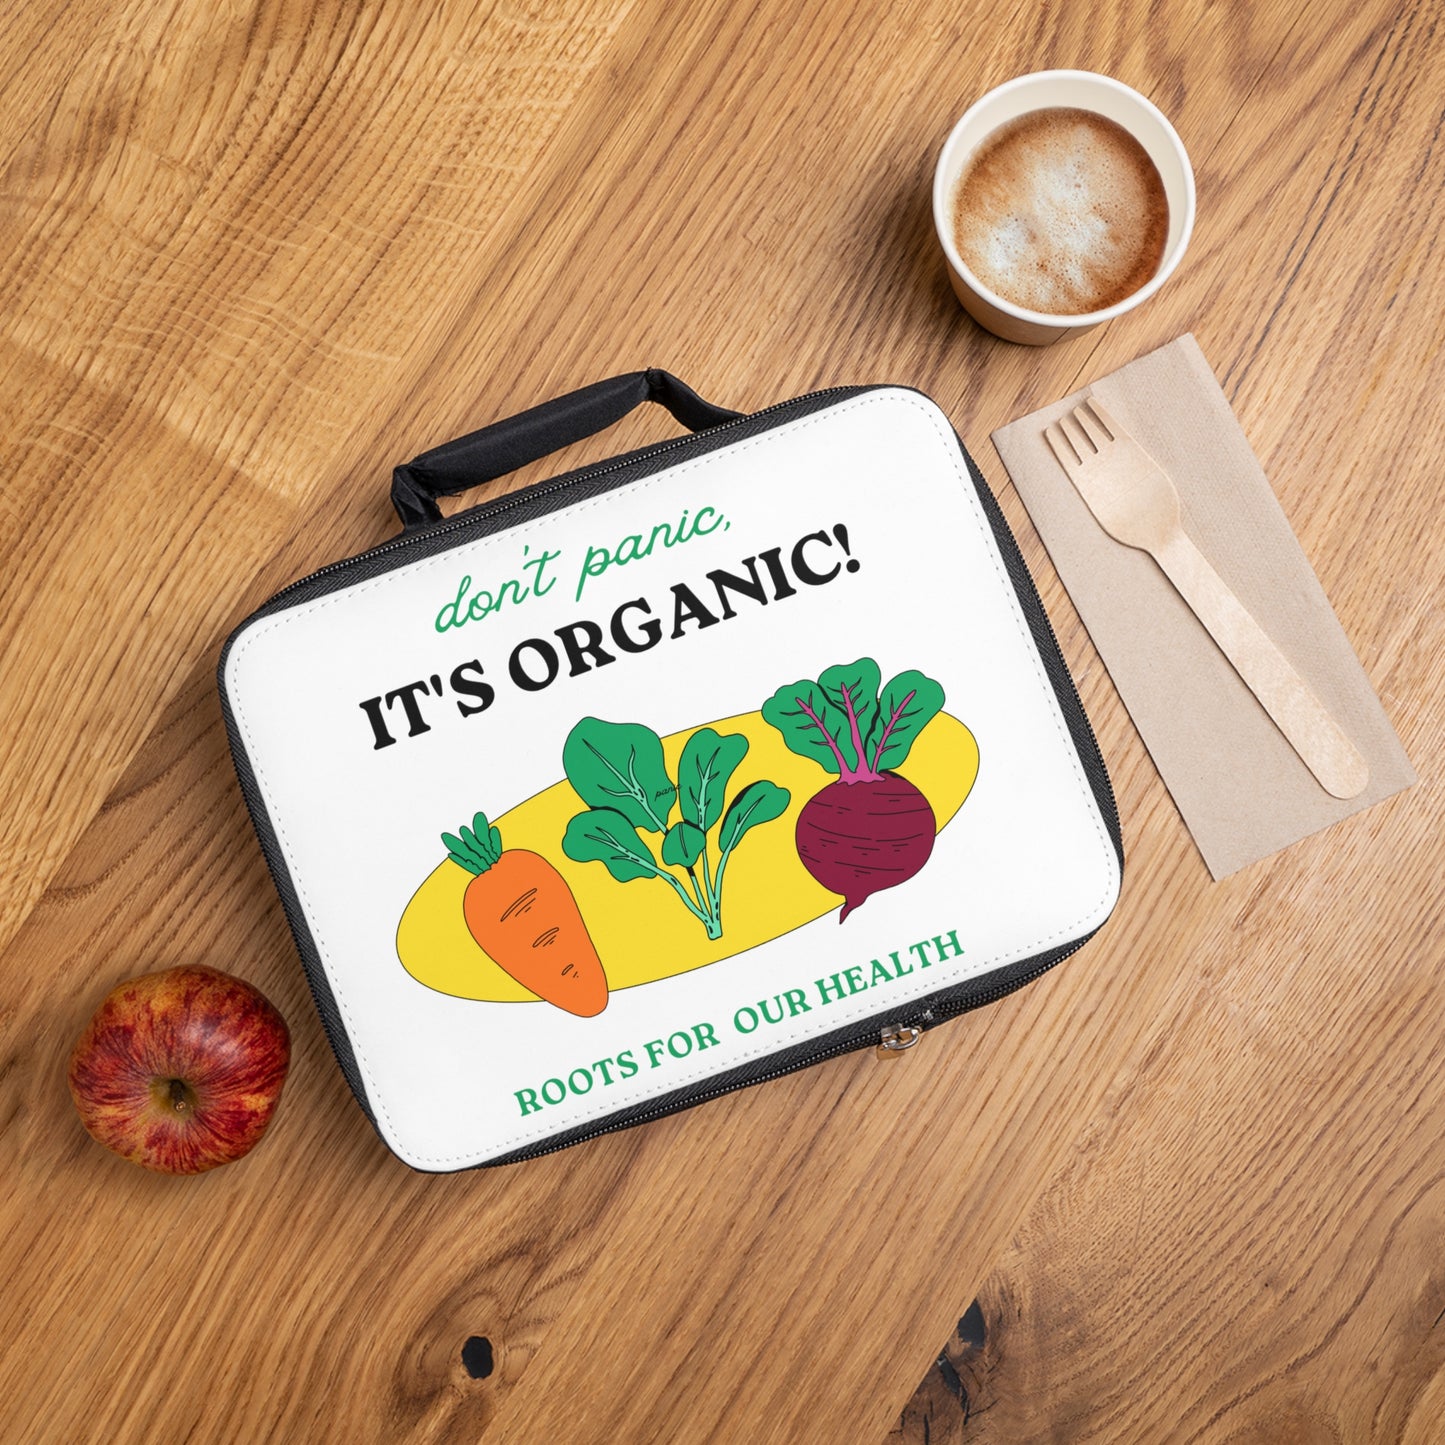 PoM's Bundle Don't Panic ... It's Organic! (#MDPIO-B06006A): T-shirt, food box, mug, mouse pad, magnets and poster (health guide)